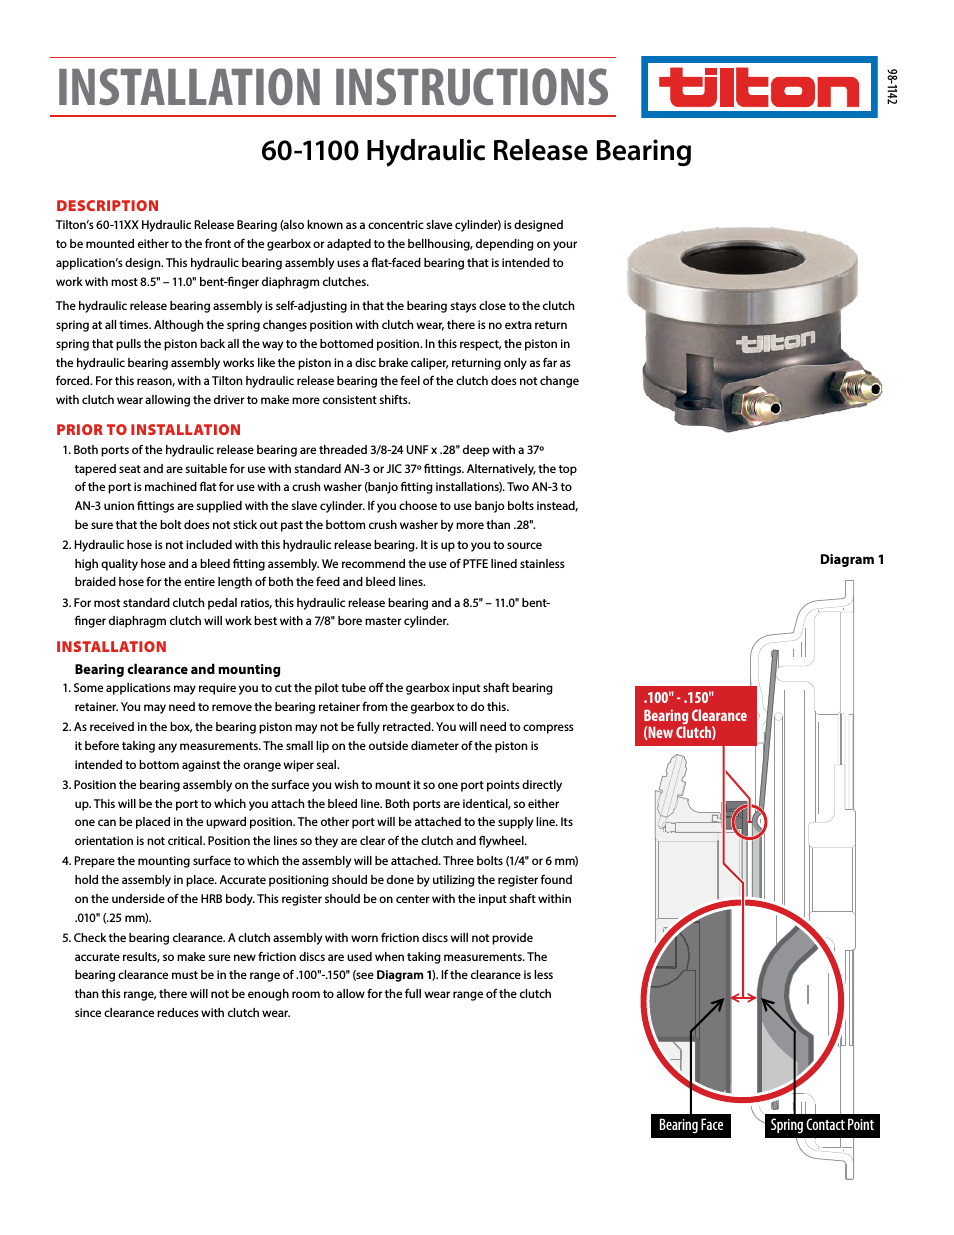 11XX Hydraulic Release Bearing (98-1142)